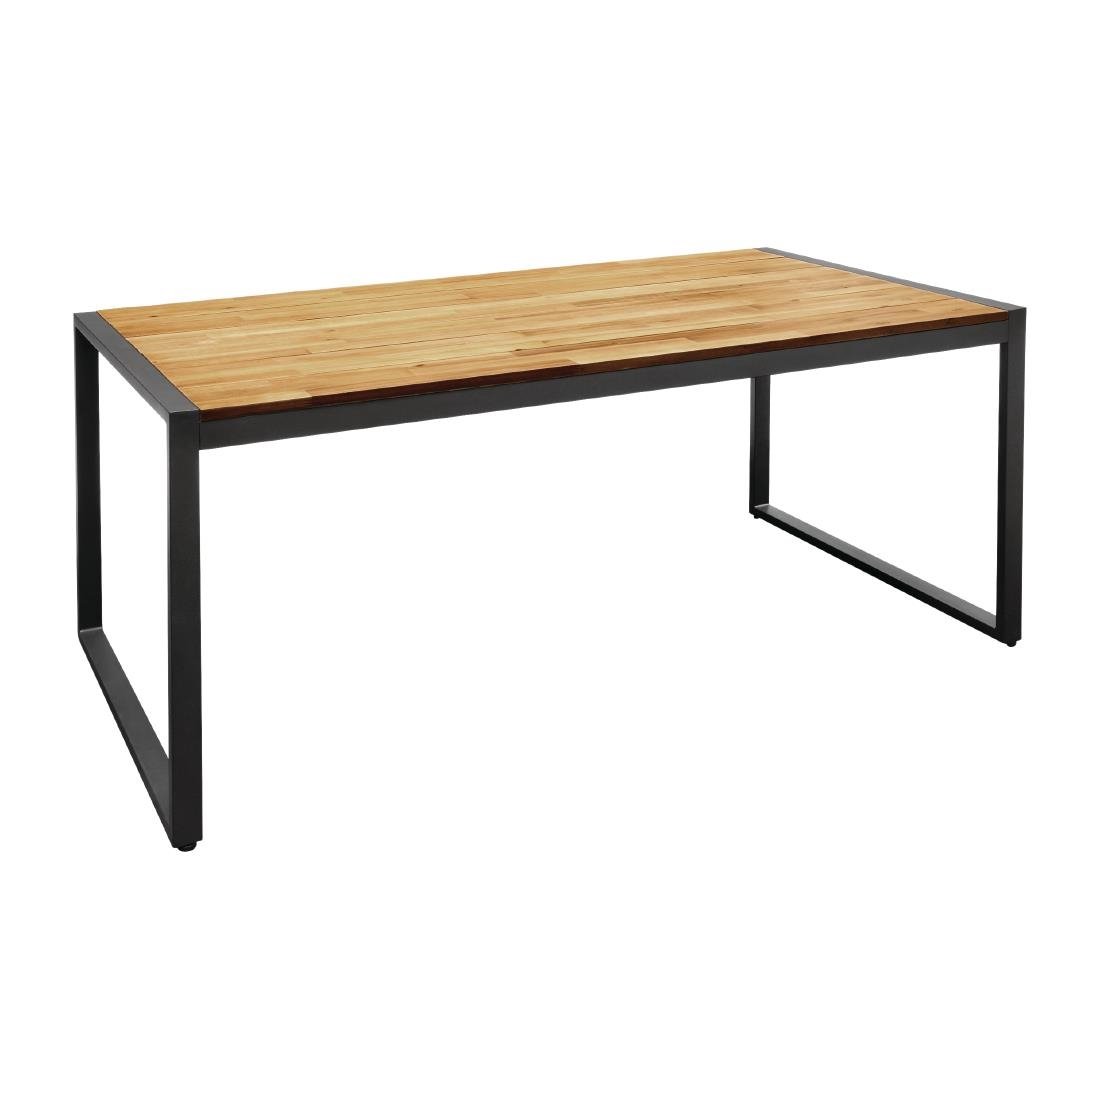 Bolero DS157 Acacia Industrial Table, Wood & Steel Rectangular - 1800mm